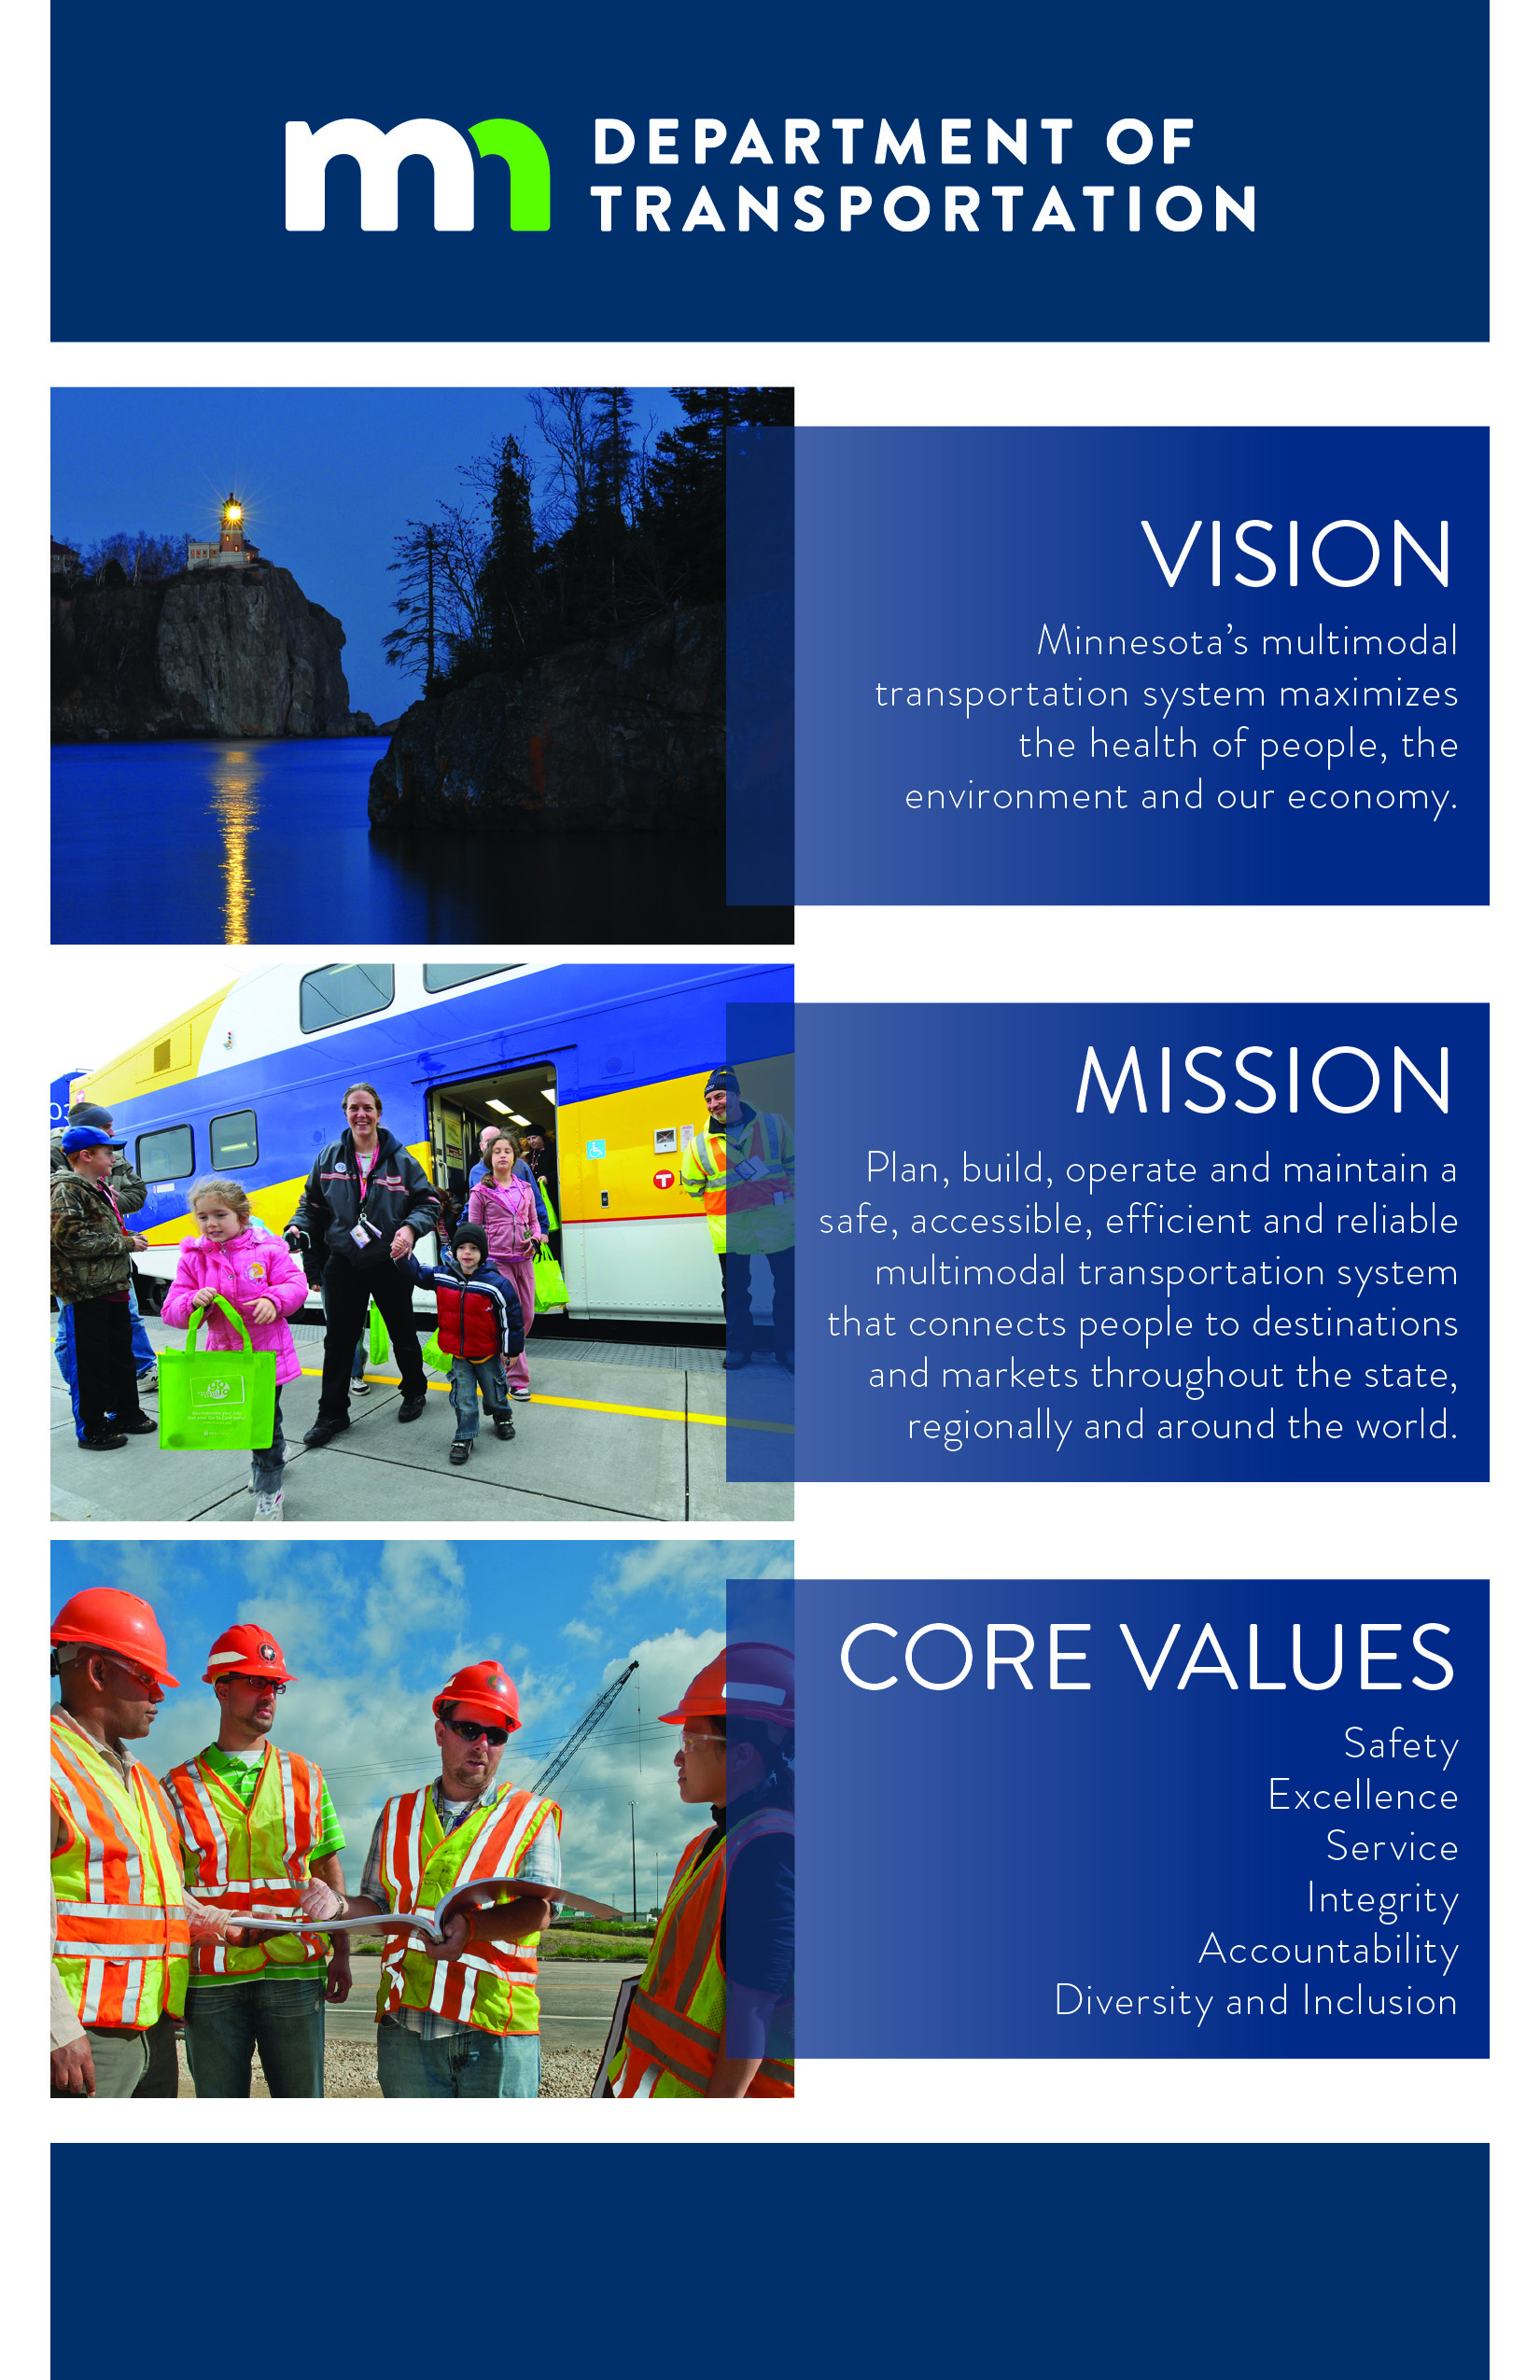 MnDOT vision, mission and core values